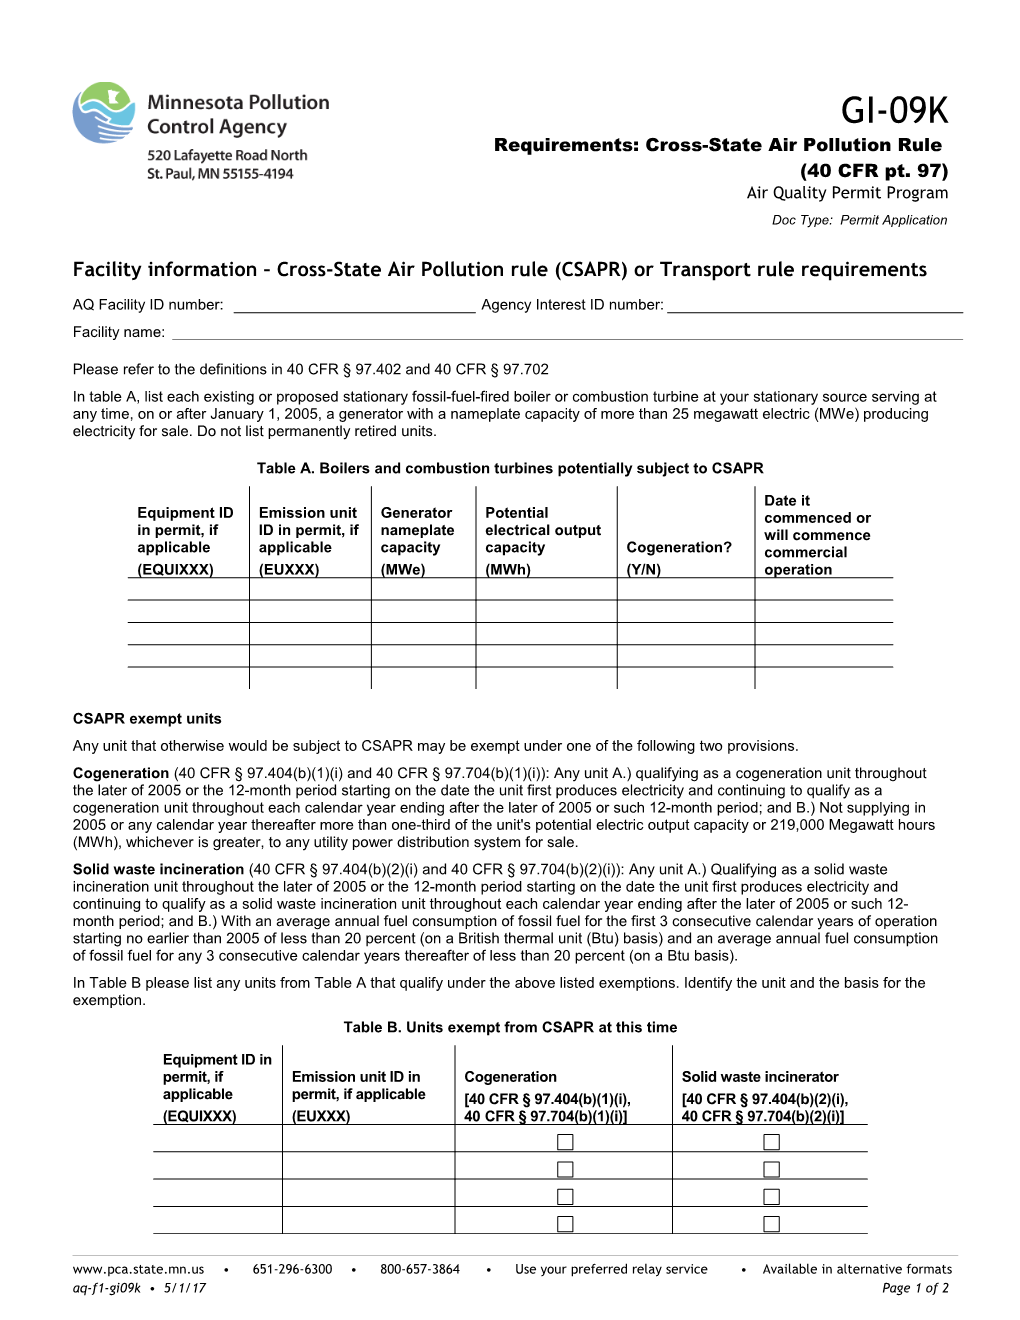 GI-09K Requirements: CSAPR for Source Categories - Air Quality Permit Program - Form